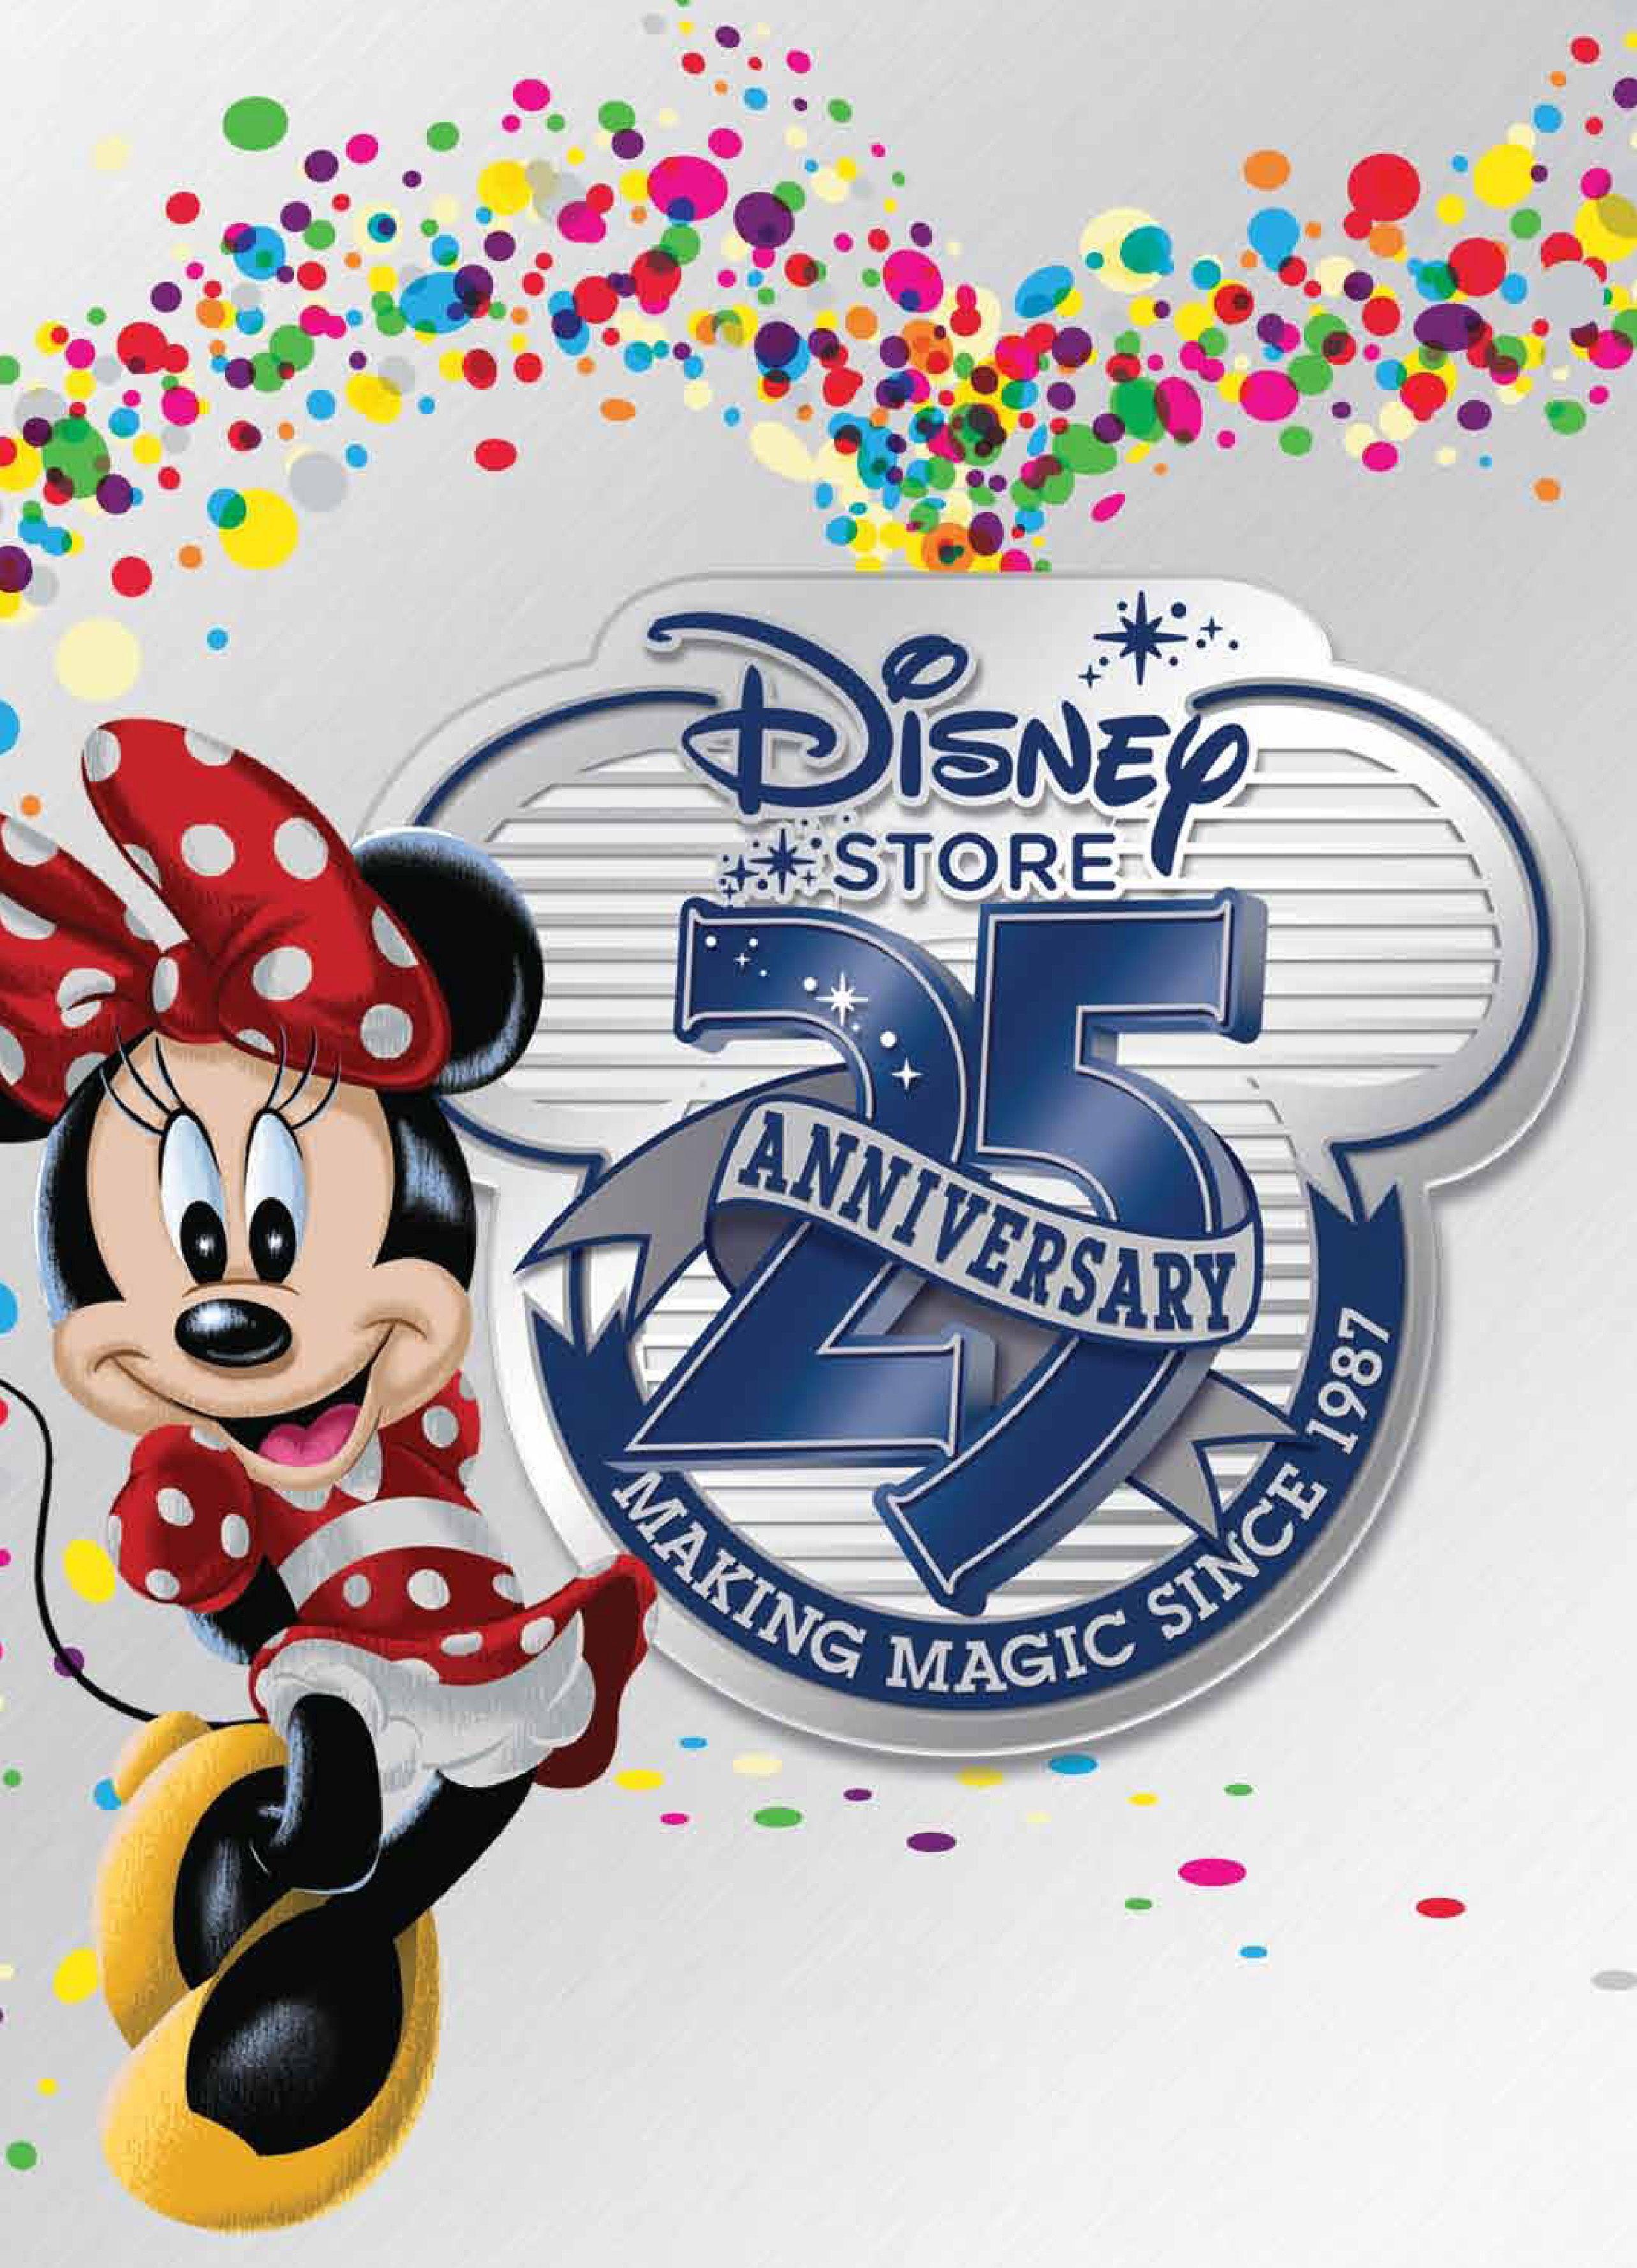 Disneystore.com Logo - Pin by Tim Schram on The Disney Store | Anniversary logo, Disney, Logos